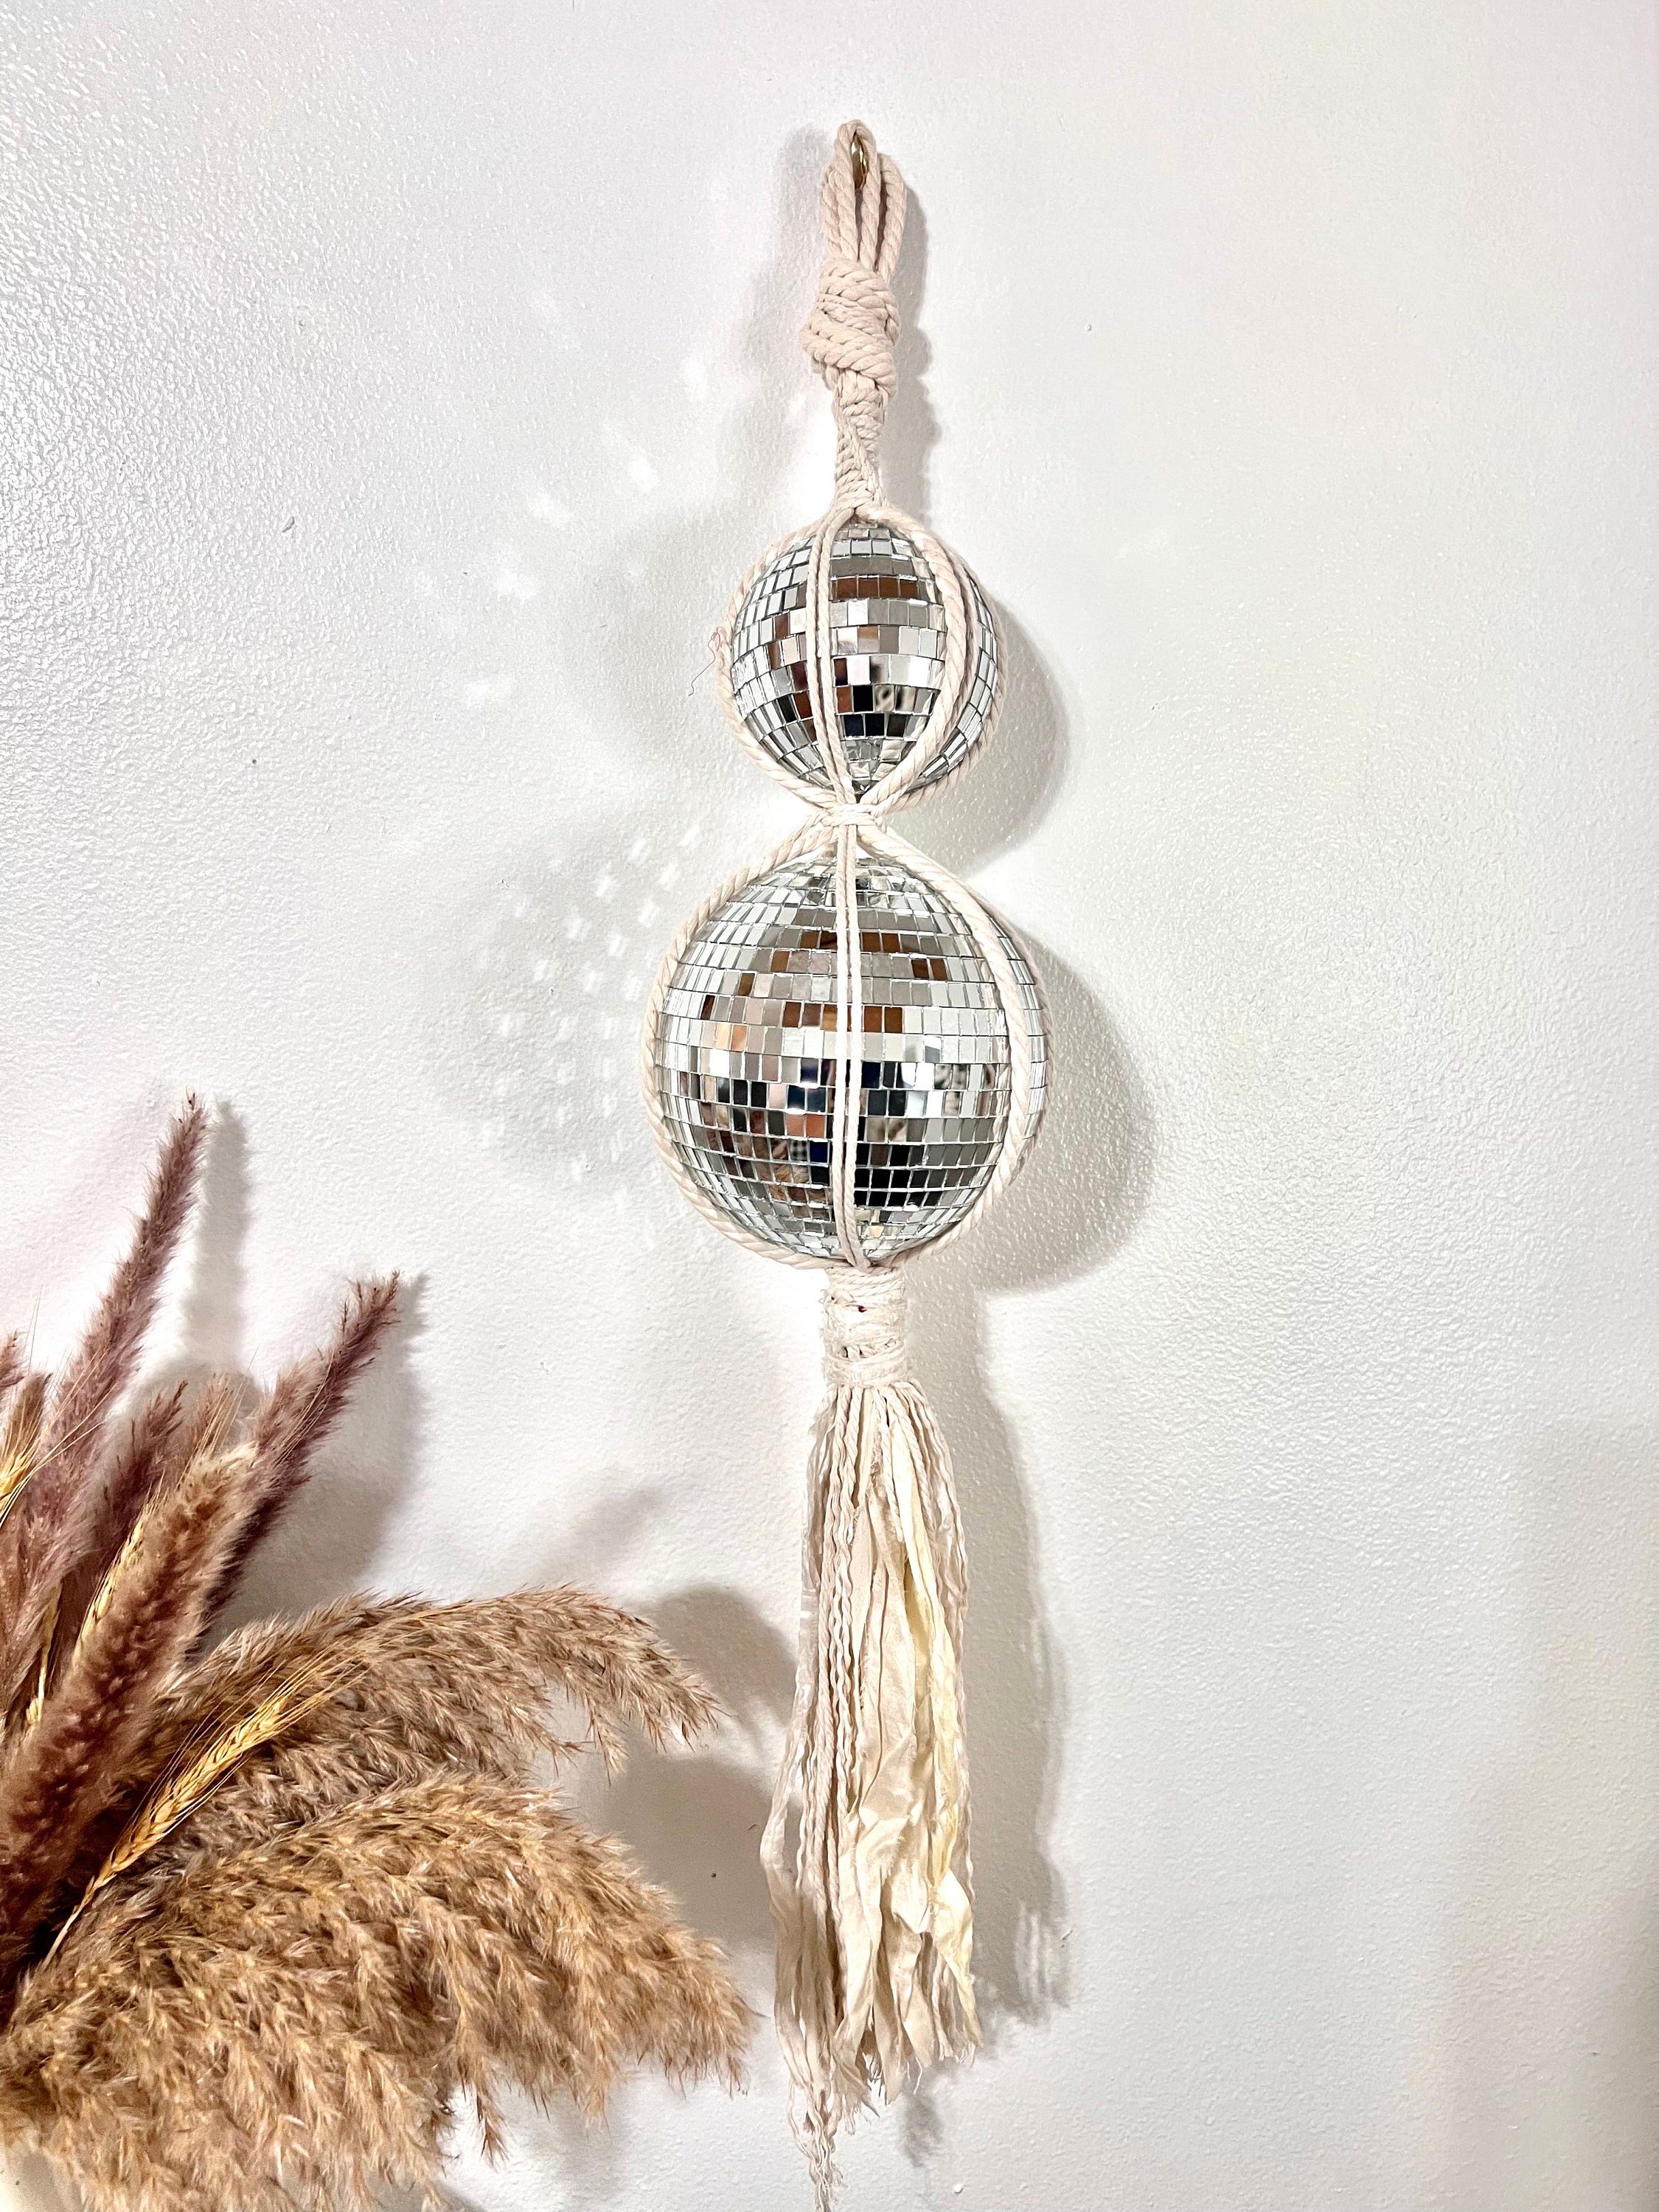 Large Disco Ball Hanger, Mirror Ball Hanging Decoration, Crochet Prism Ball  Hanger Ornament, Outdoor Indoor Party Decor, Best Seller 